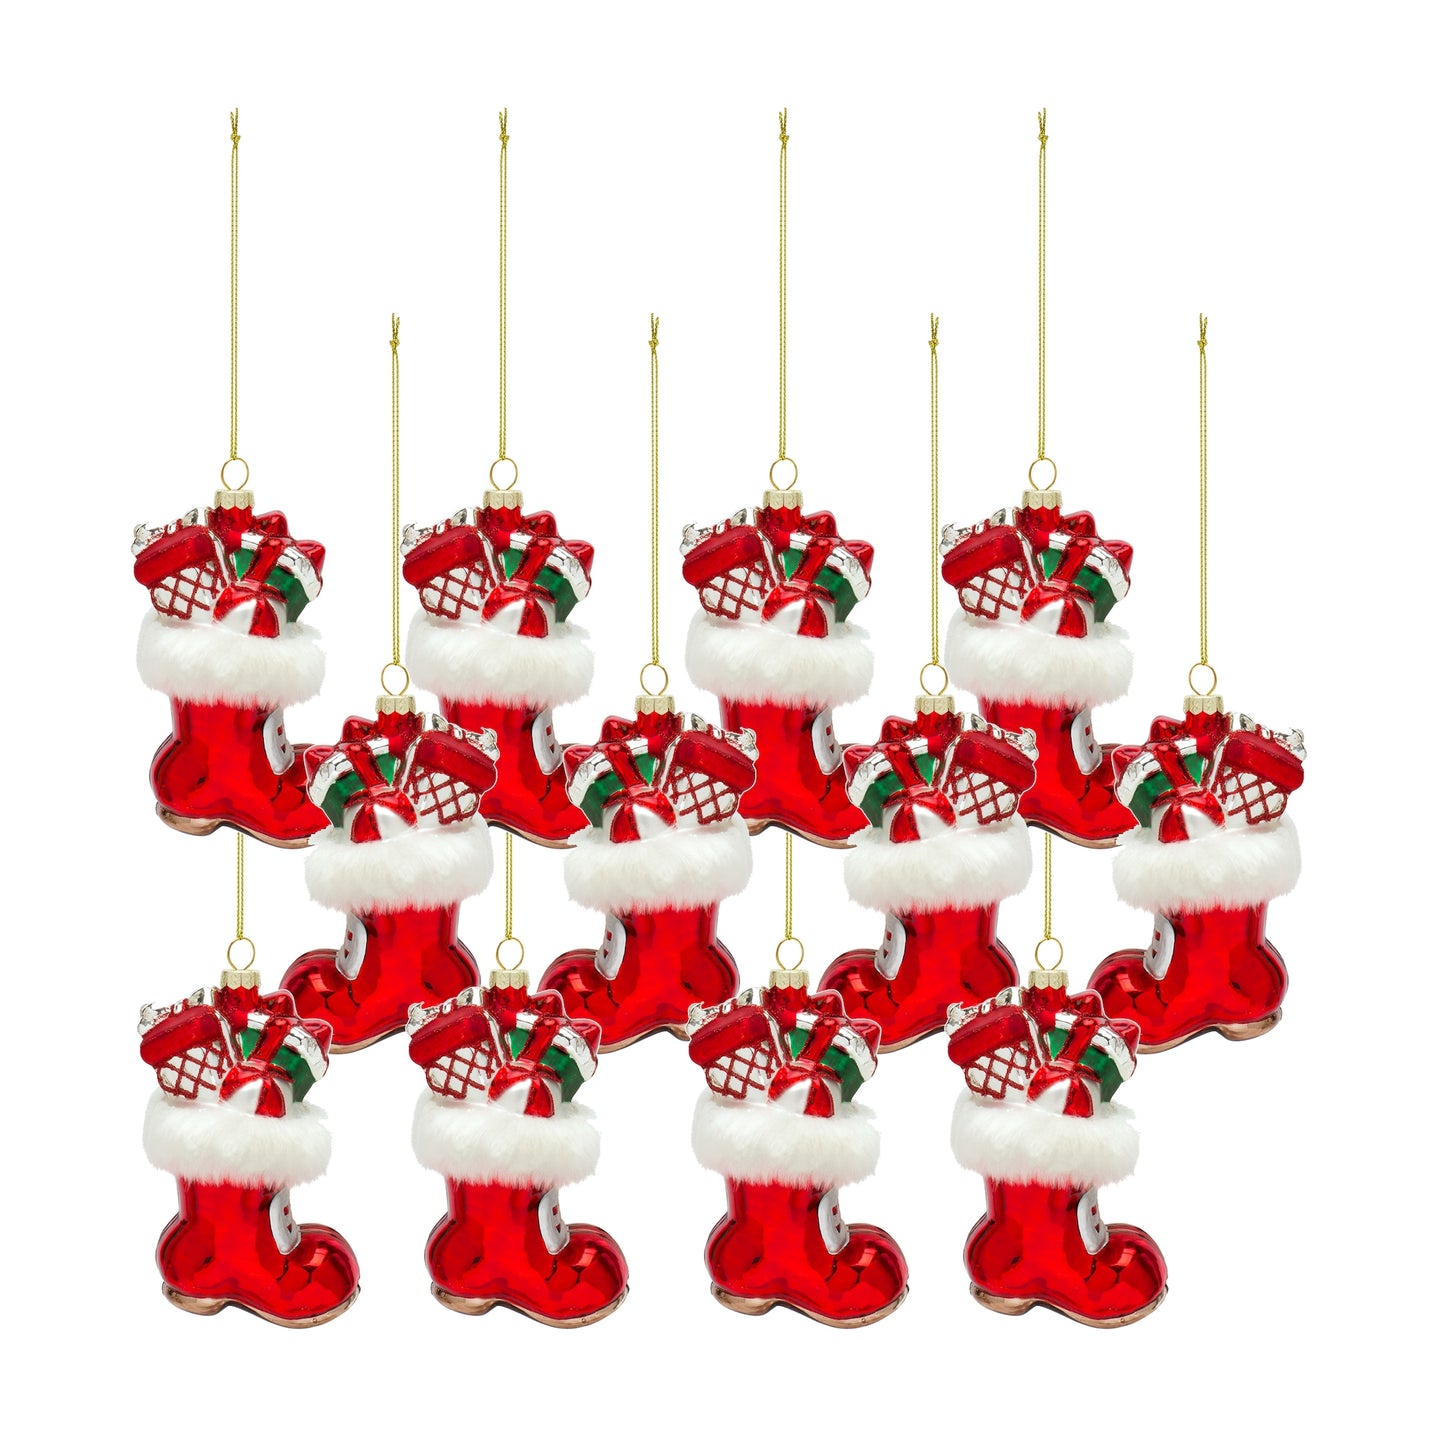 Santa Boot and Presents Glass Ornament (Set of 12)